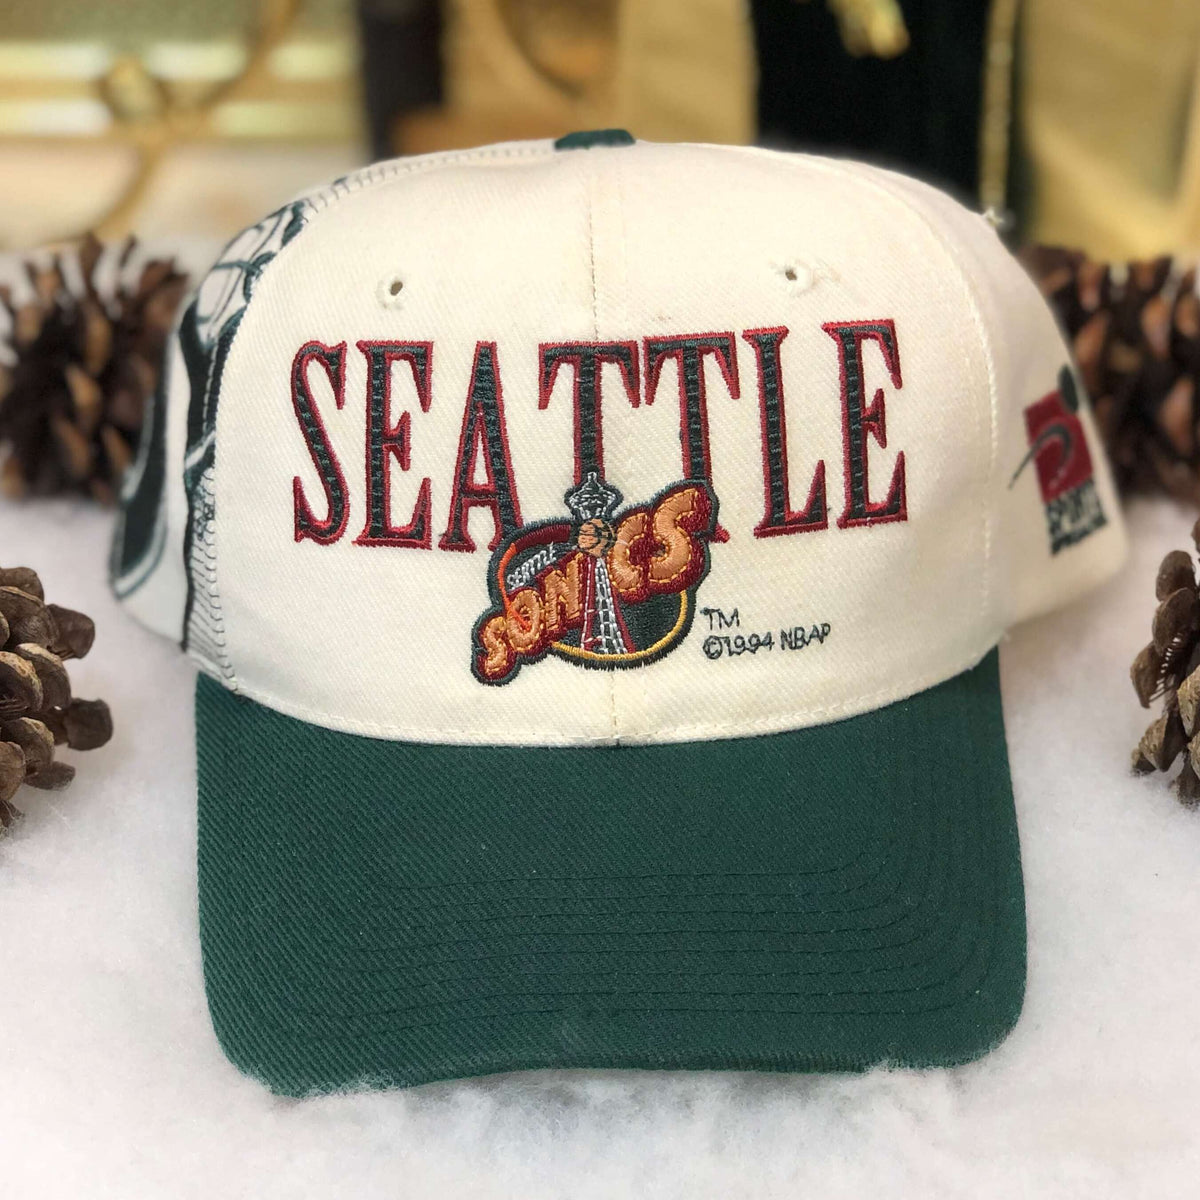 Boston Bruins Vintage 90's Sports Specialties Laser Snapback Cap Hat